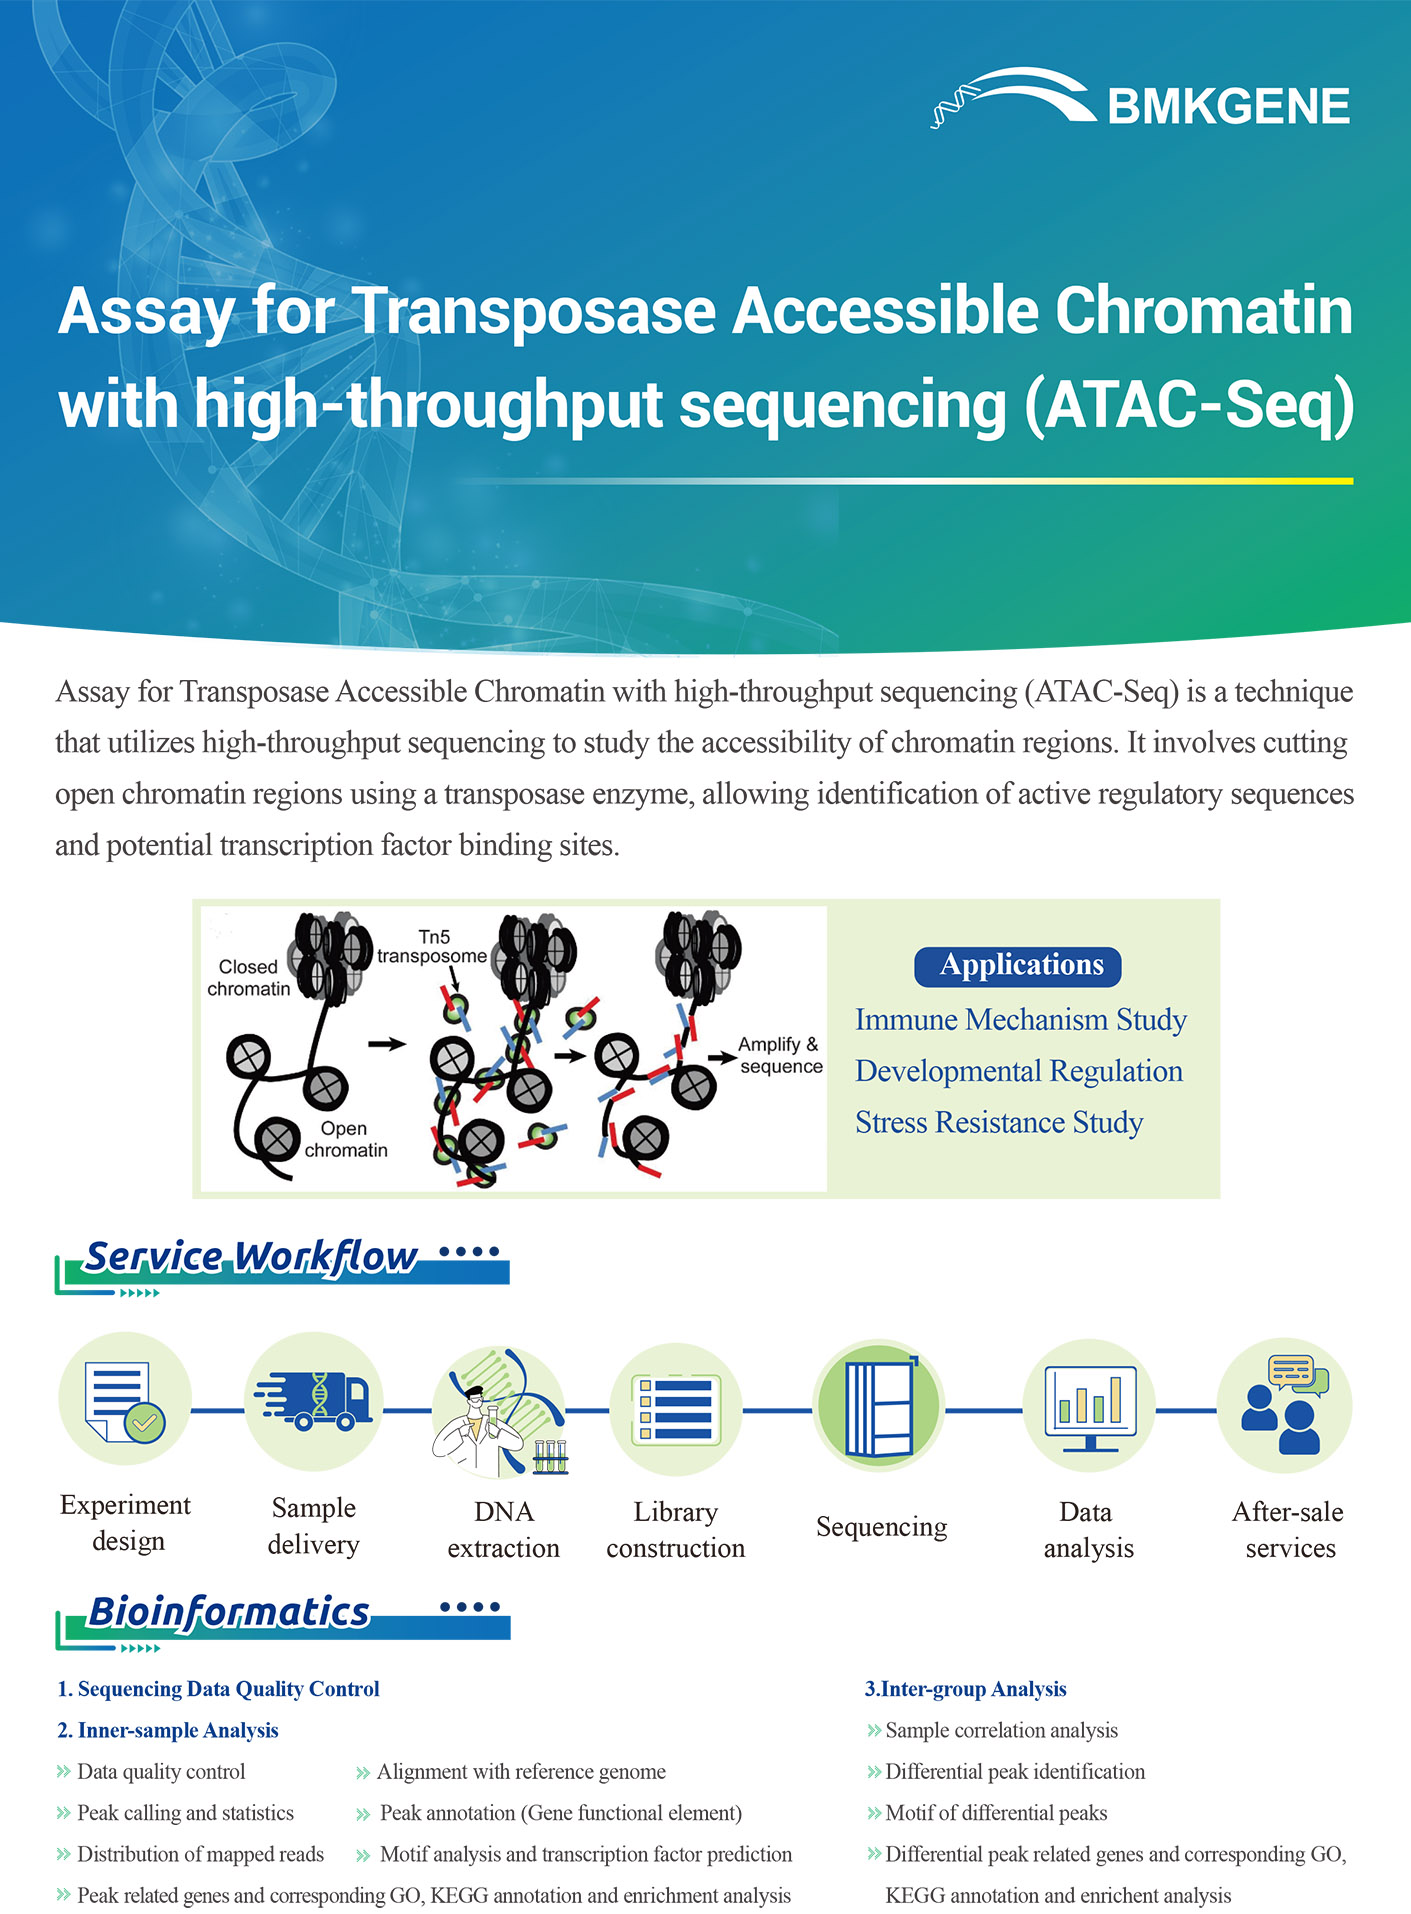 http://www.bmkgene.com/uploads/Assay-for-Transposase-Accessible-Chromatin-with-high-throughput-sequencing-ATAC-Seq-BMKGENE-2310.pdf